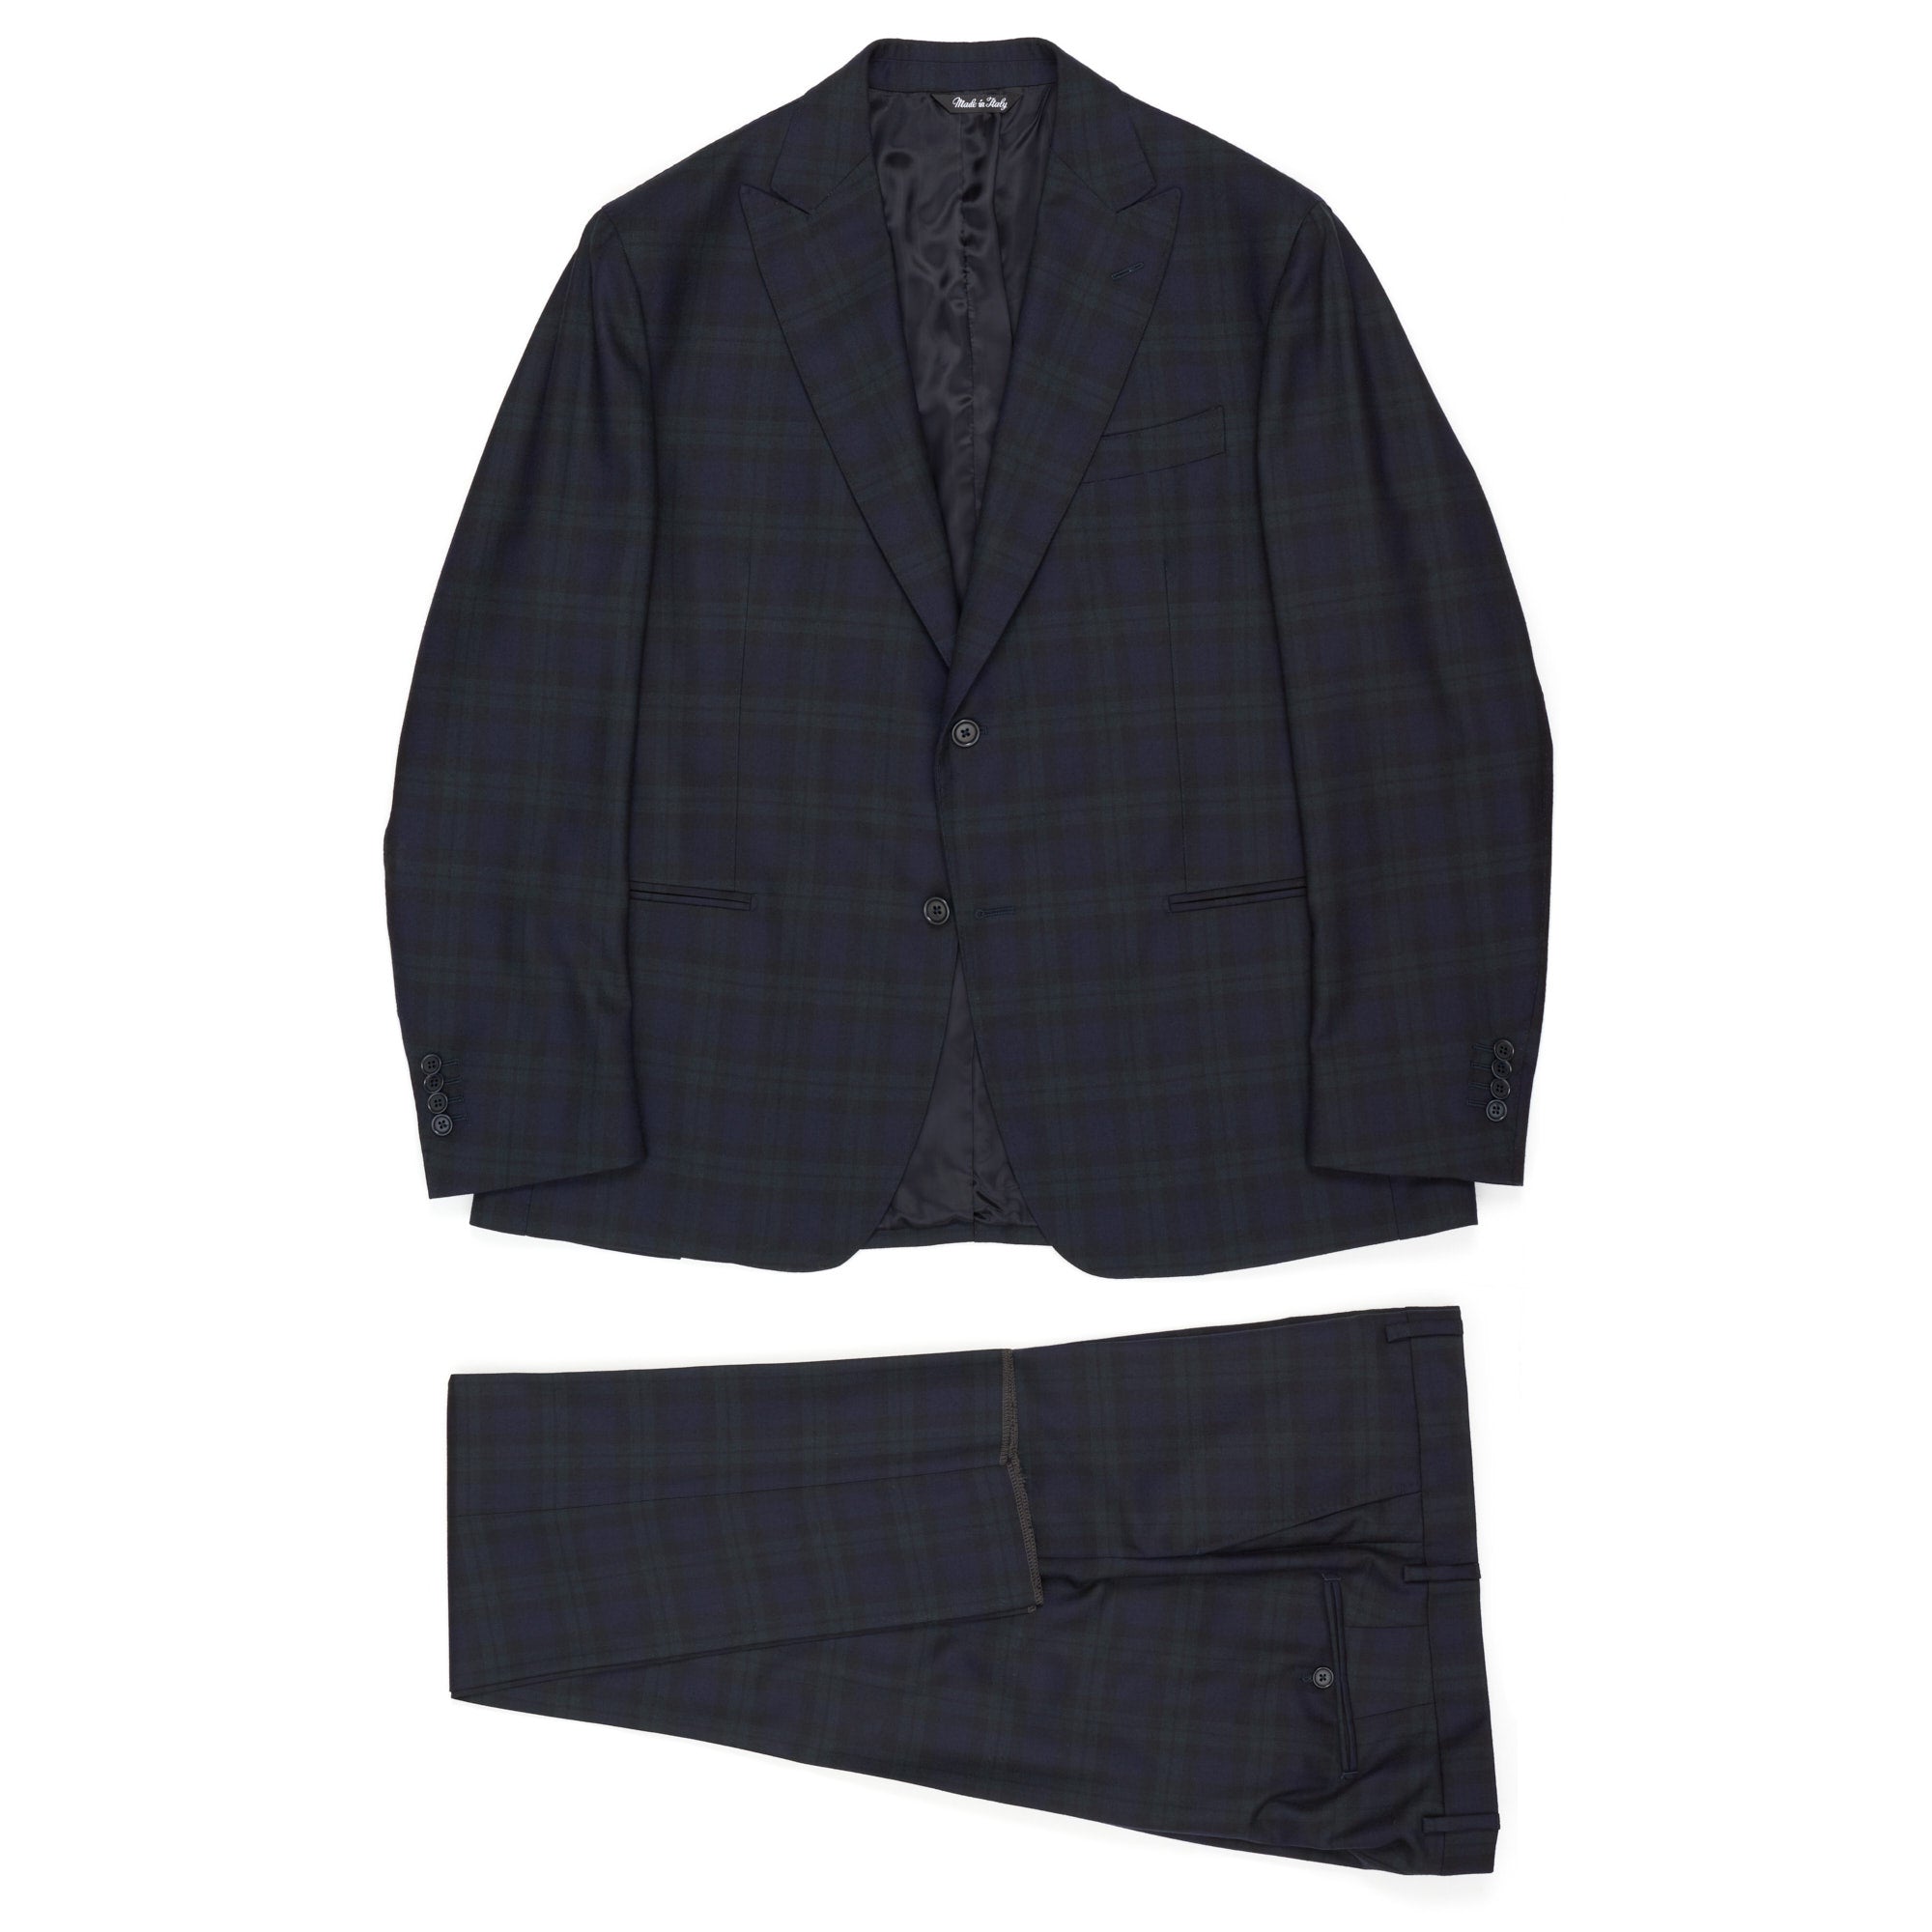 VINCENZO PALUMBO VBC Wool Super 120's Peak Lapel Suit 56 NEW US 46